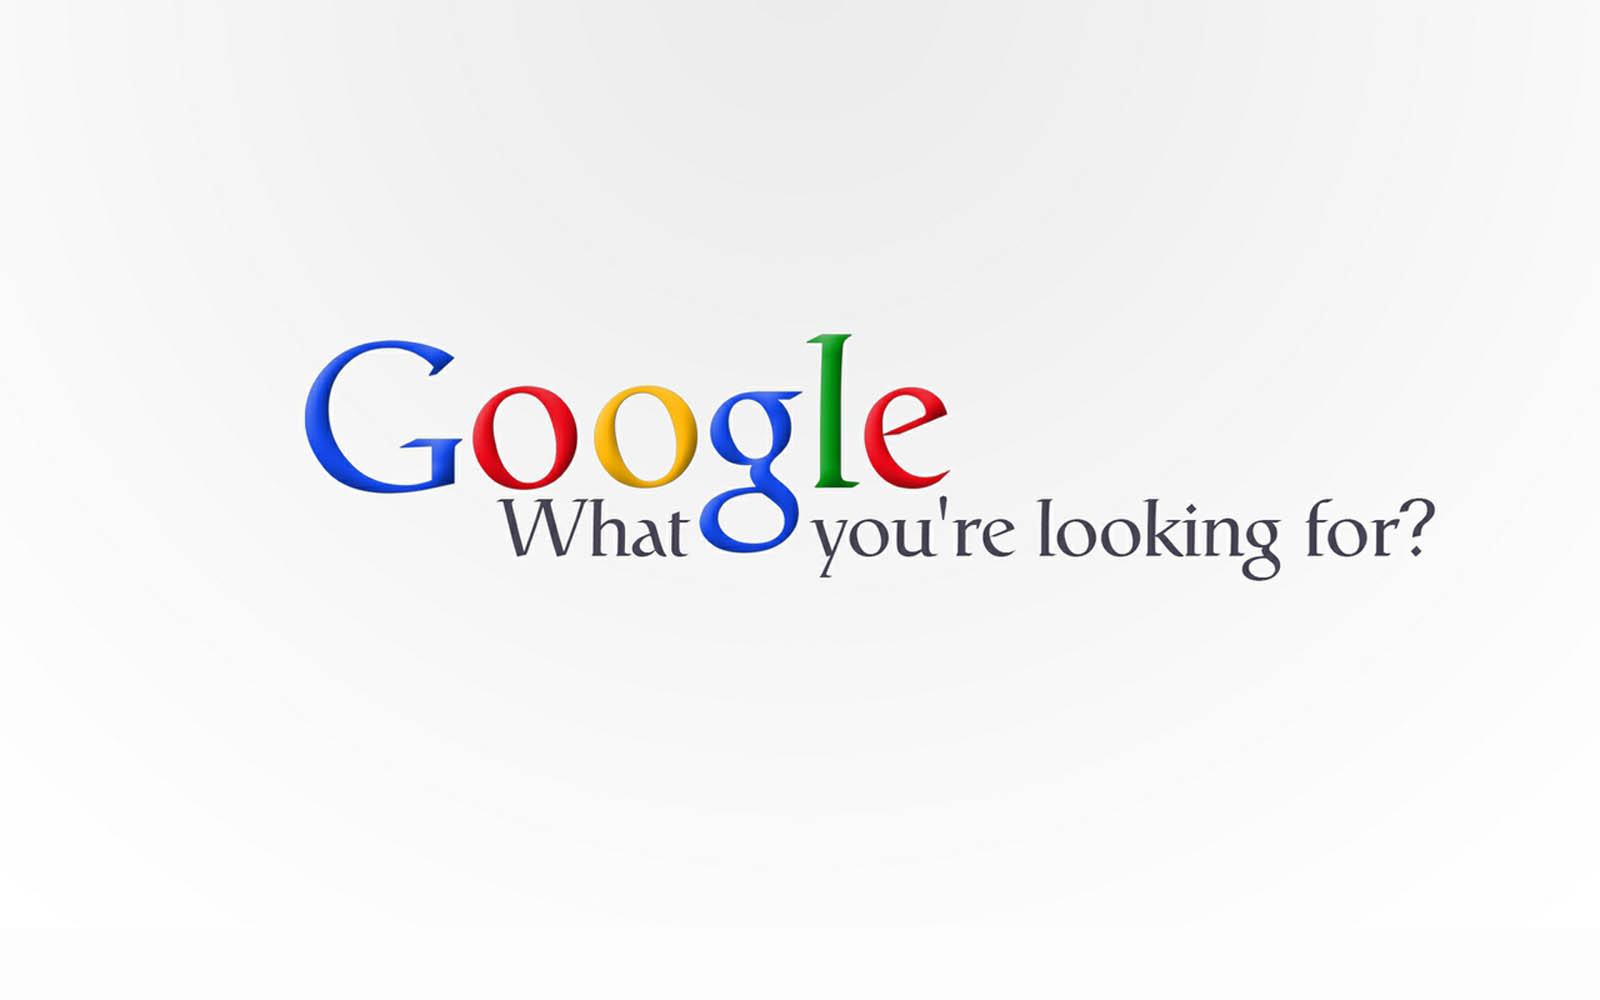 Google Wallpaper Desktop Background